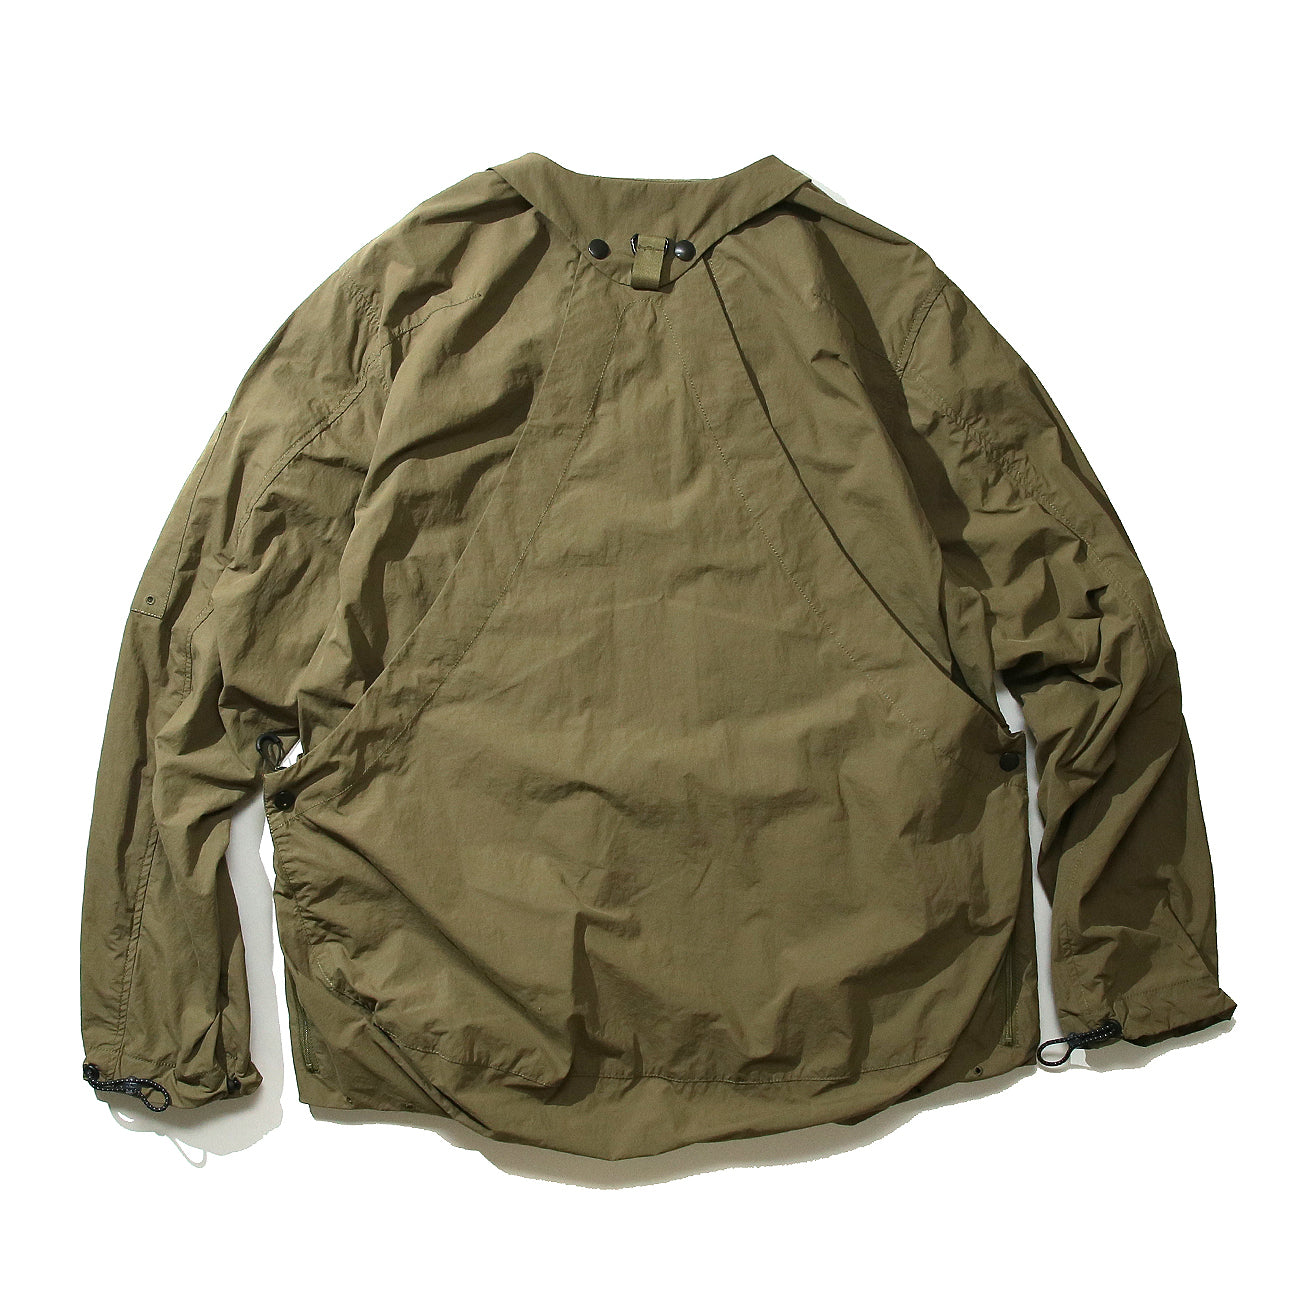 NORBIT HNJK-012 Field Jacket -Olive